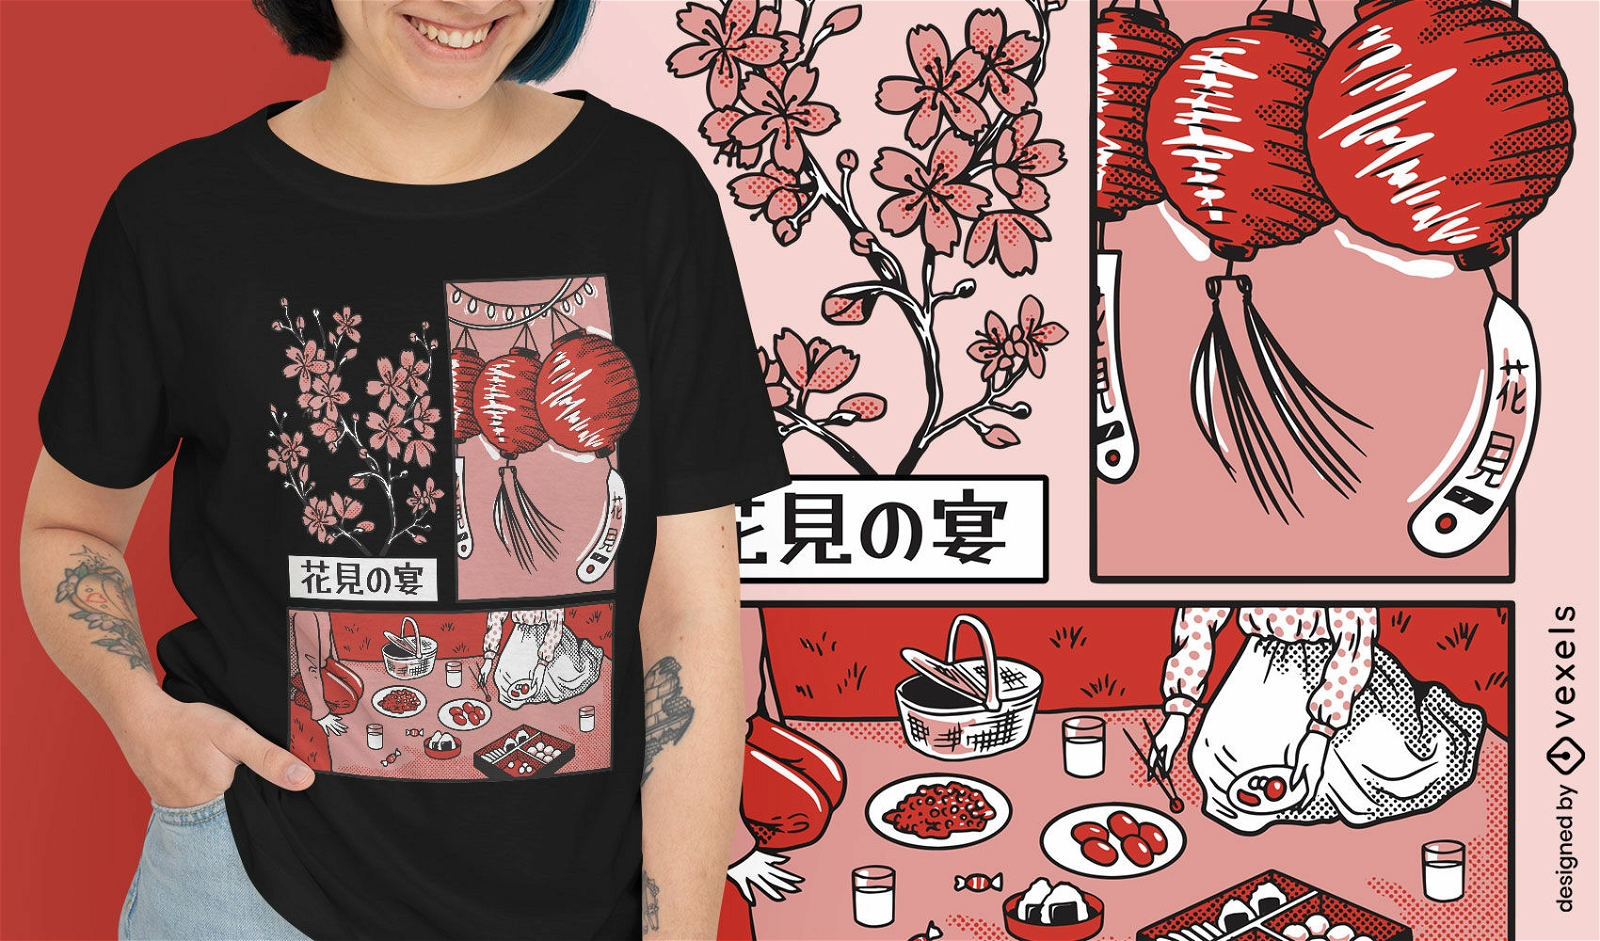 Japanese cherry blossom picnic t-shirt design